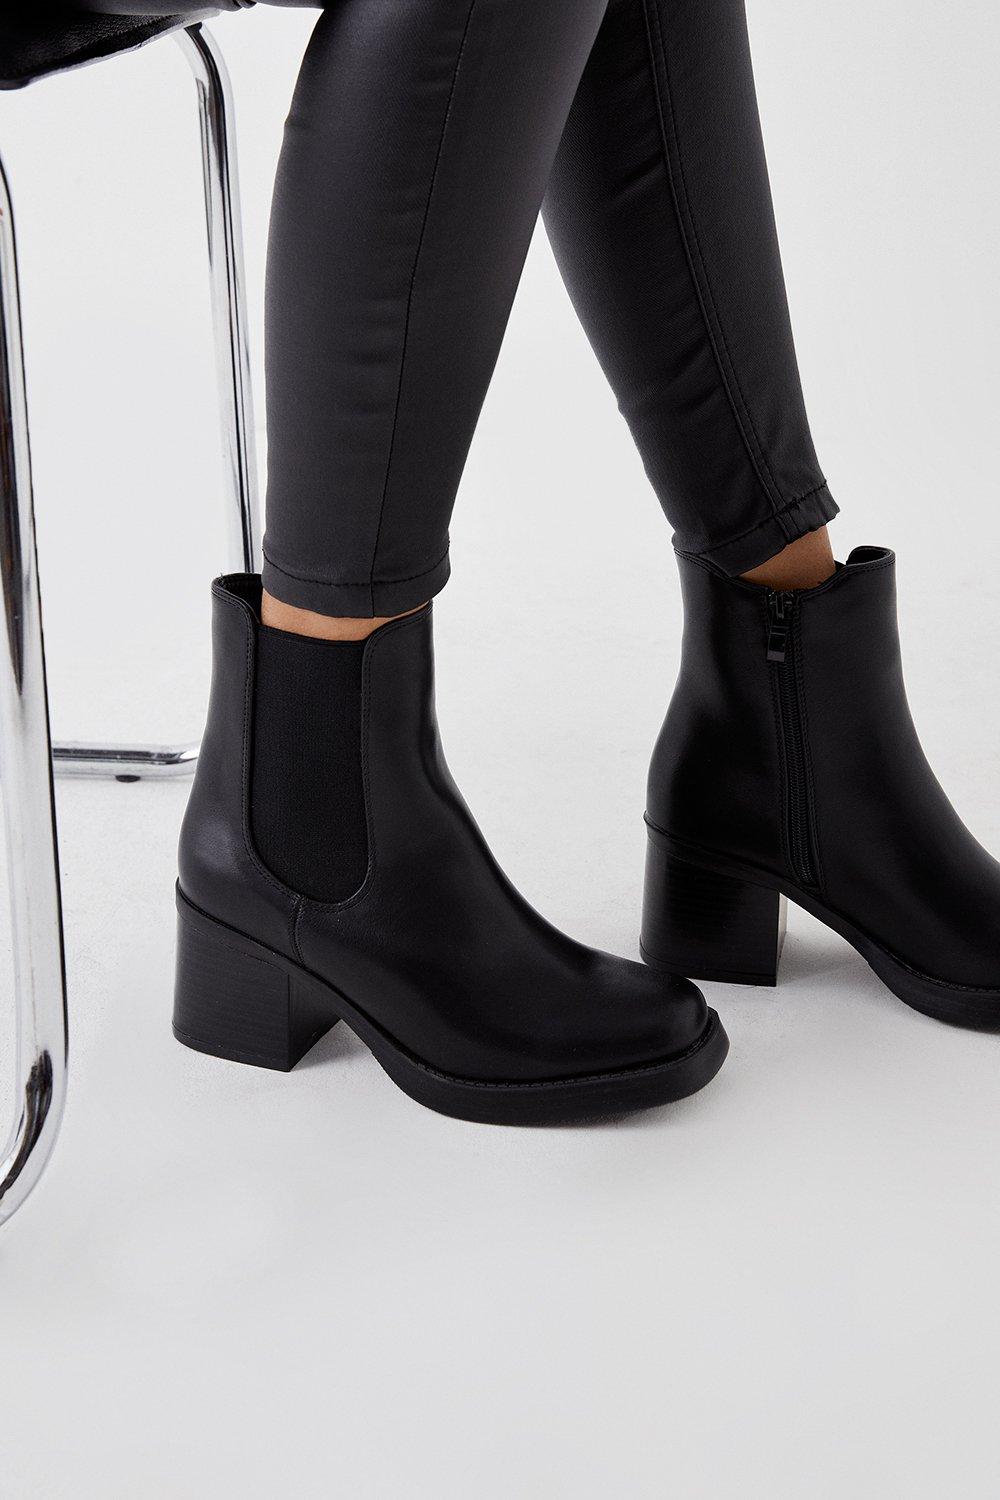 Women’s Faith: Alberta Square Toe Stack Heel Ankle Boots - black - 8